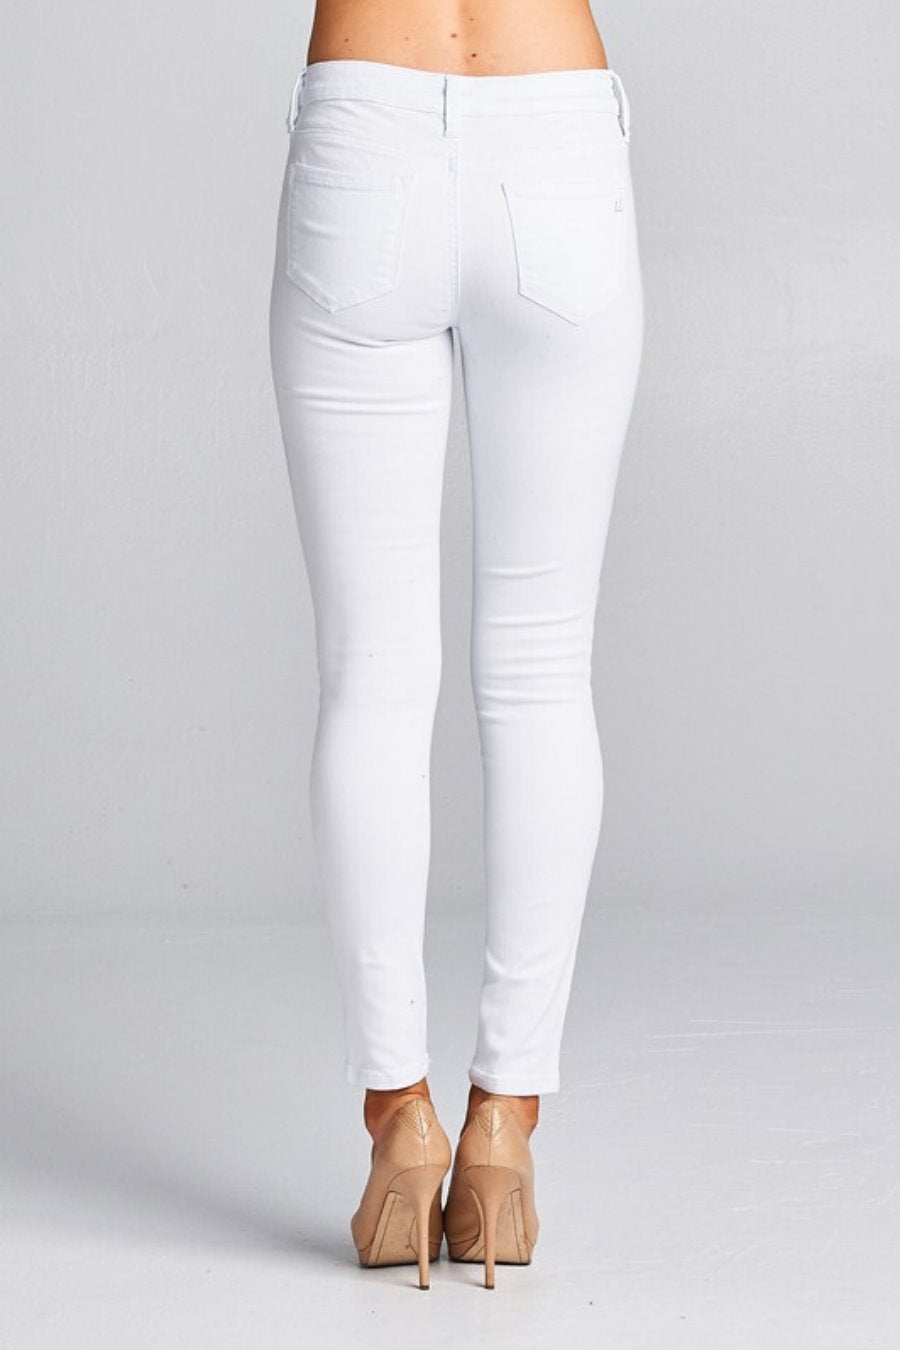 Jade White Denim Skinny Jeans